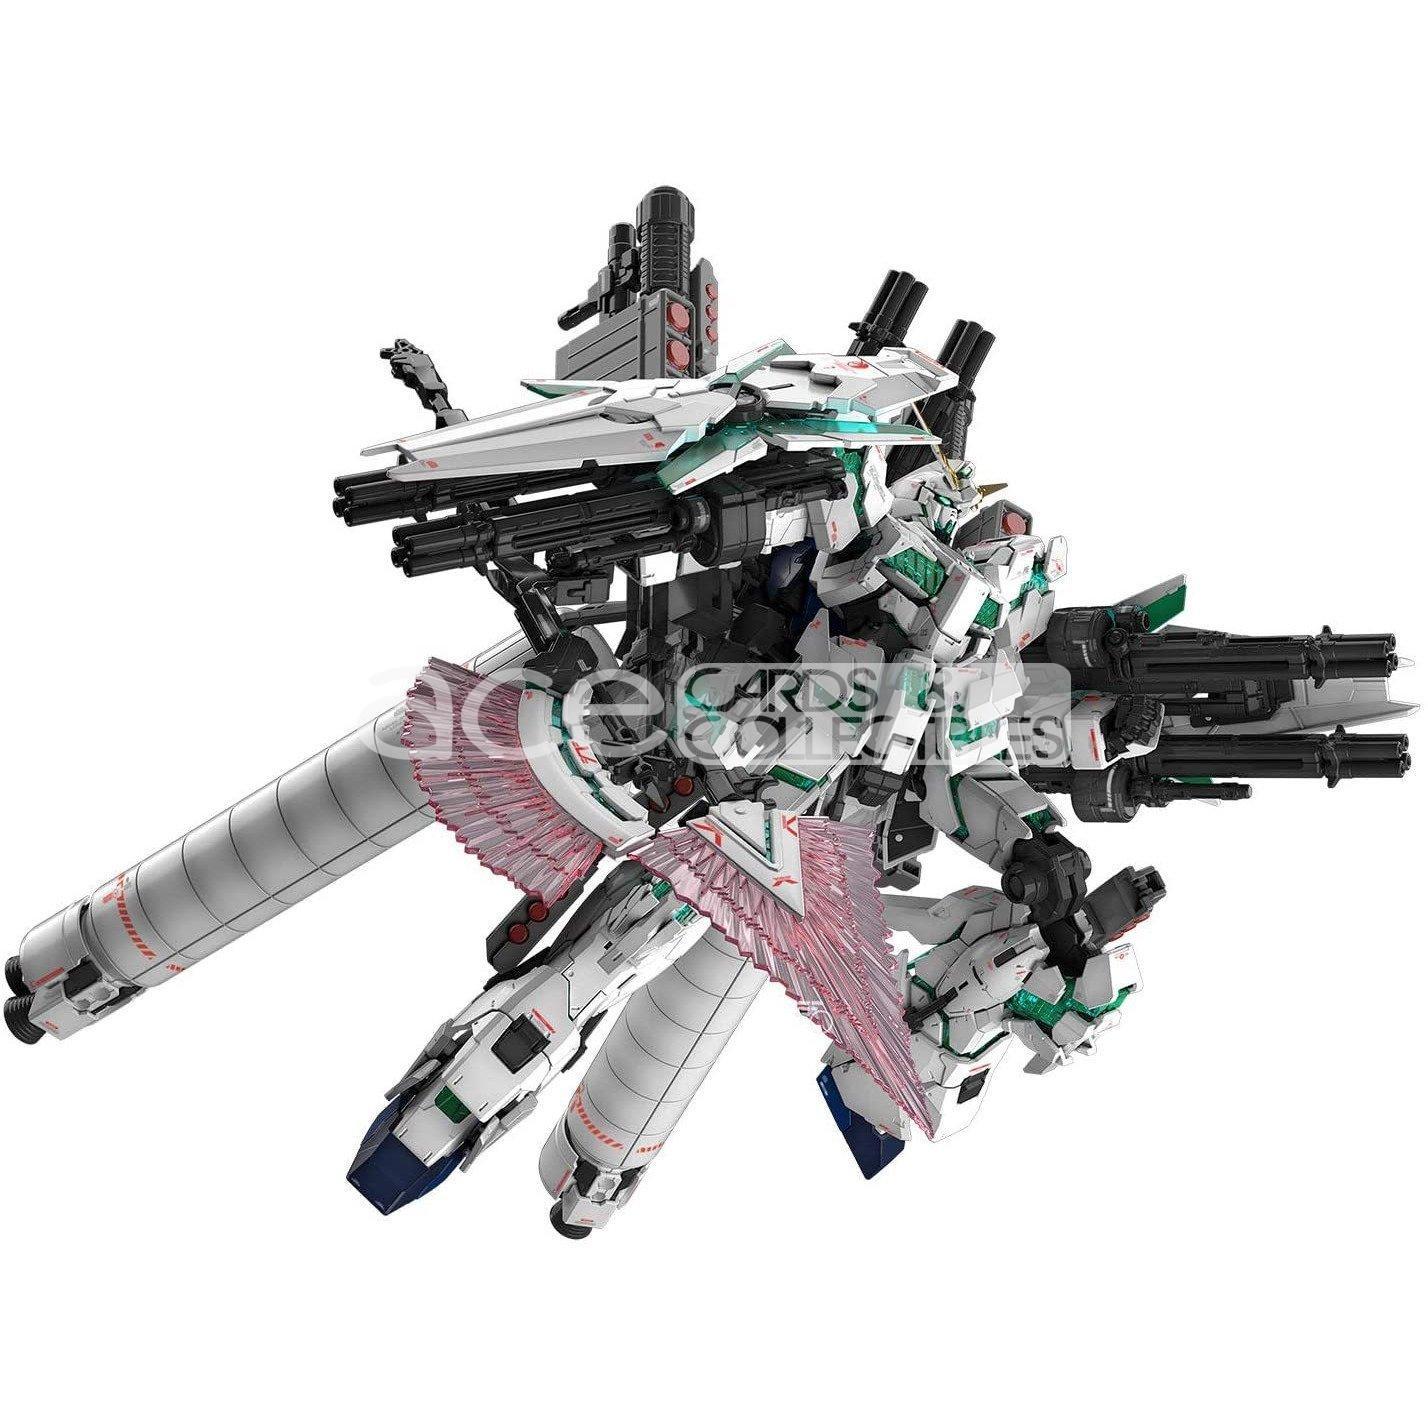 Gunpla RG 1/144 Full Armor Unicorn Gundam-Bandai-Ace Cards & Collectibles